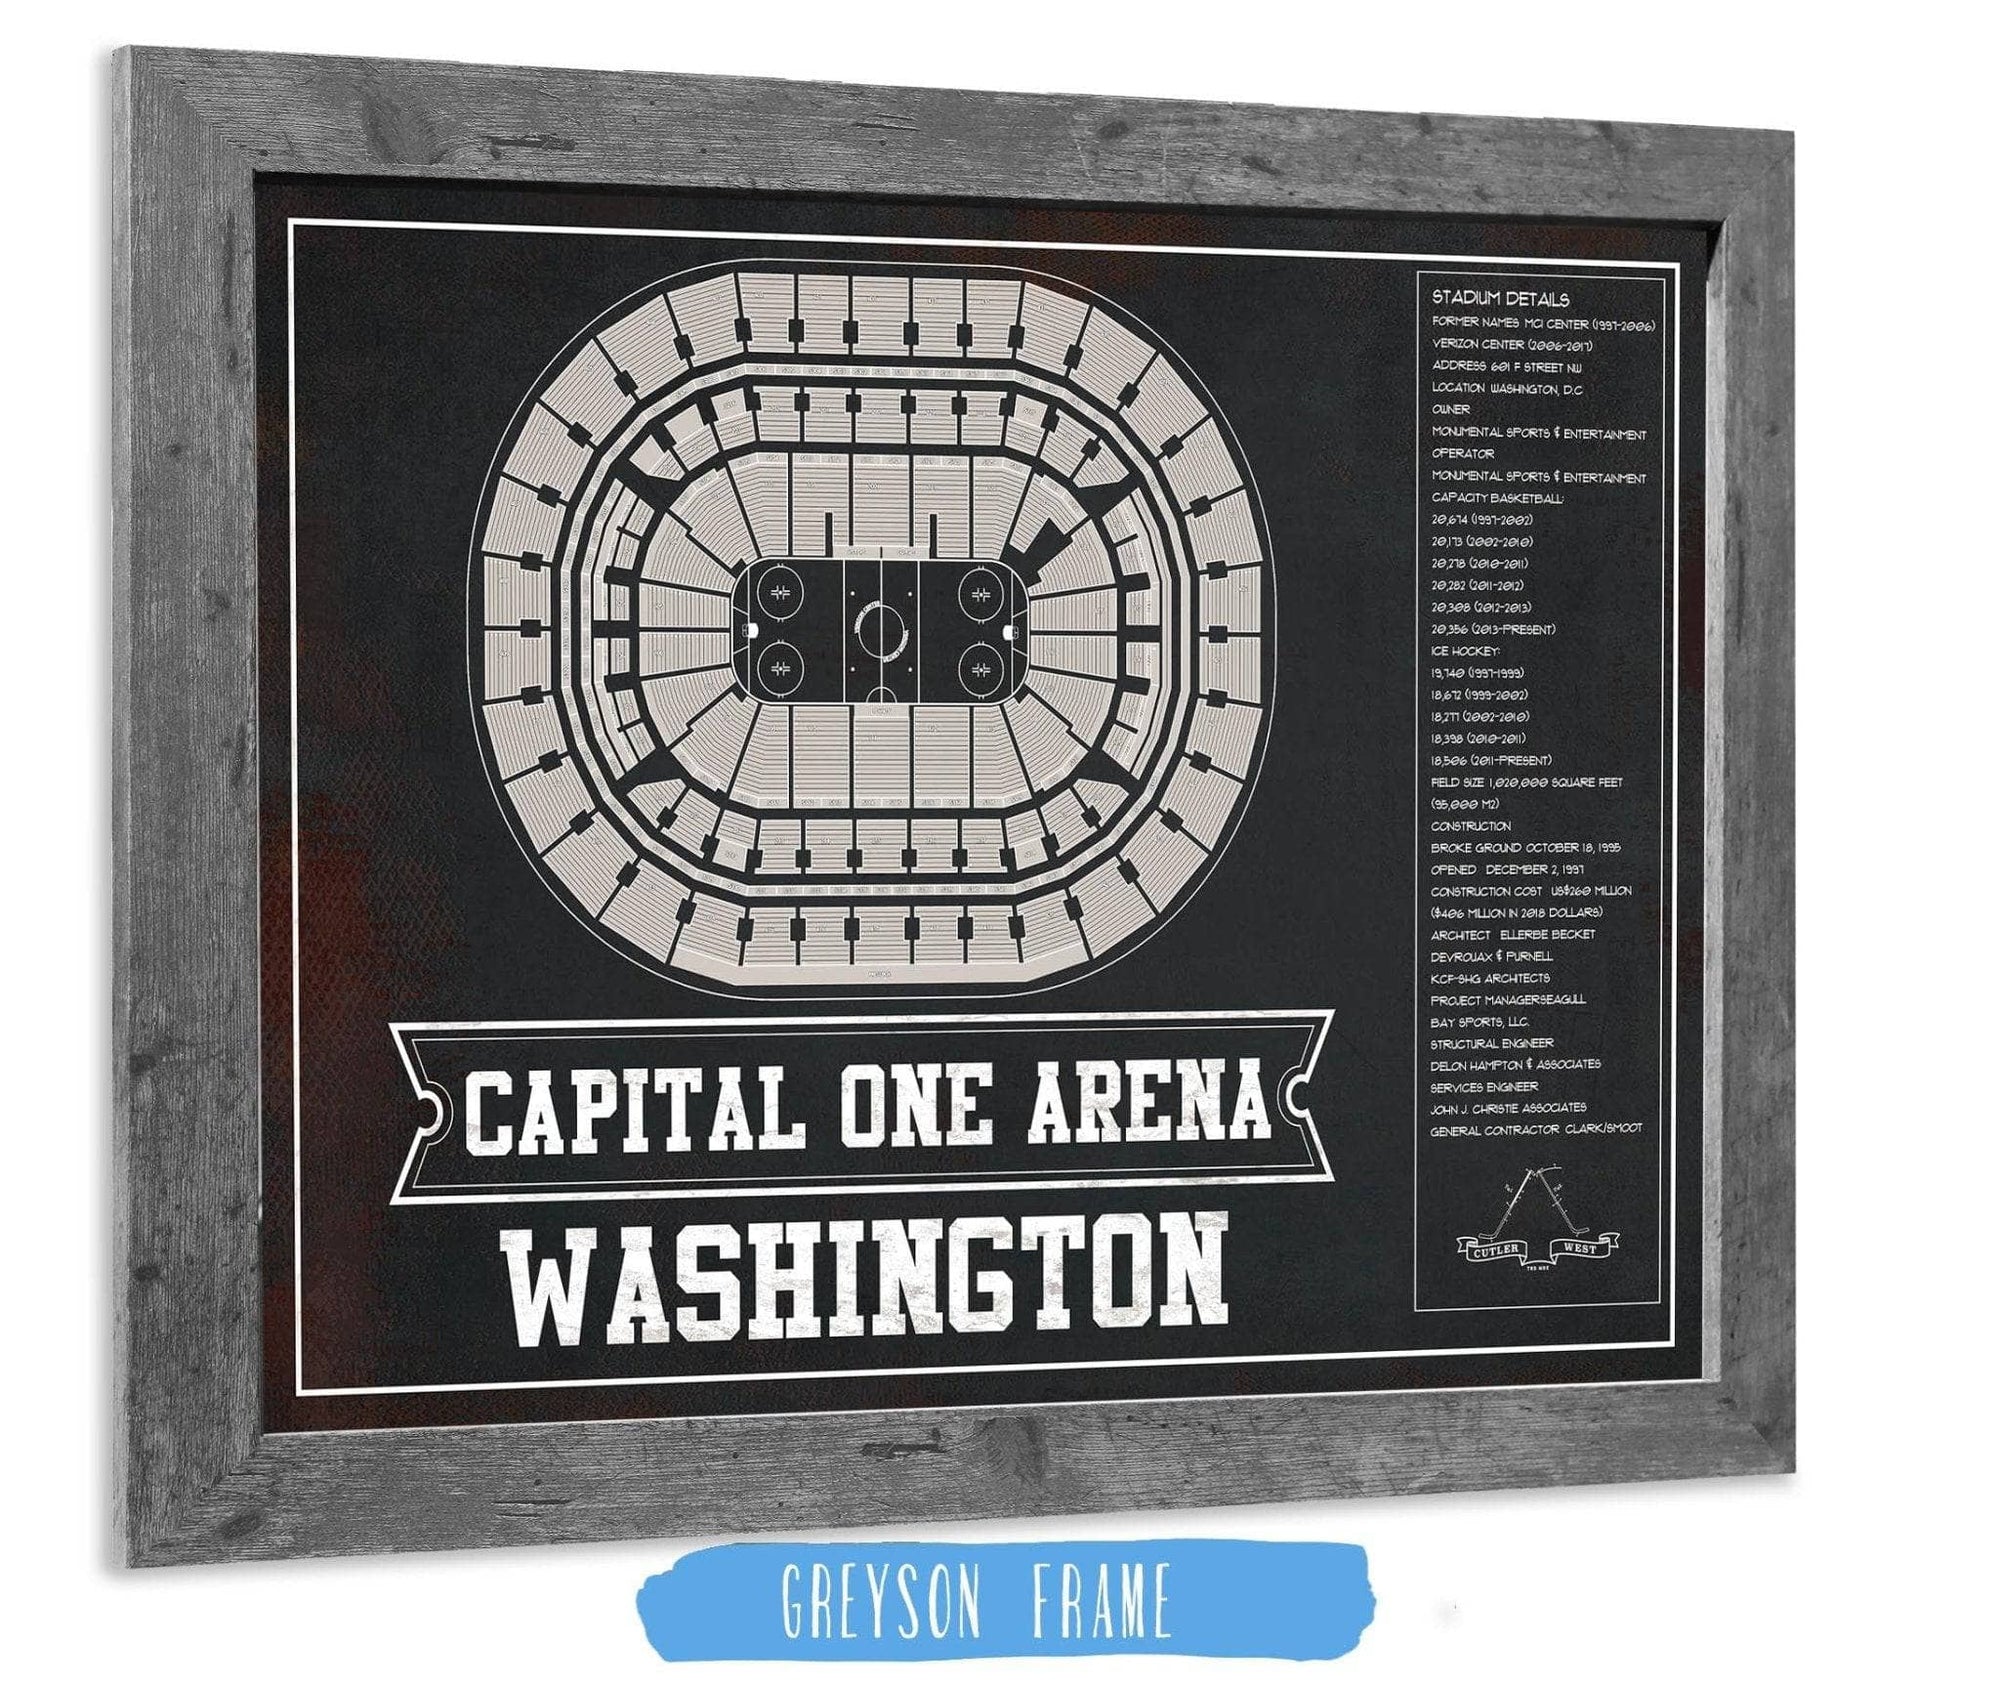 Cutler West 14" x 11" / Greyson Frame Washington Capitals Team color - Capital One Arena Seating Chart Vintage Art Print 673825643-TEAM-14"-x-11"81783